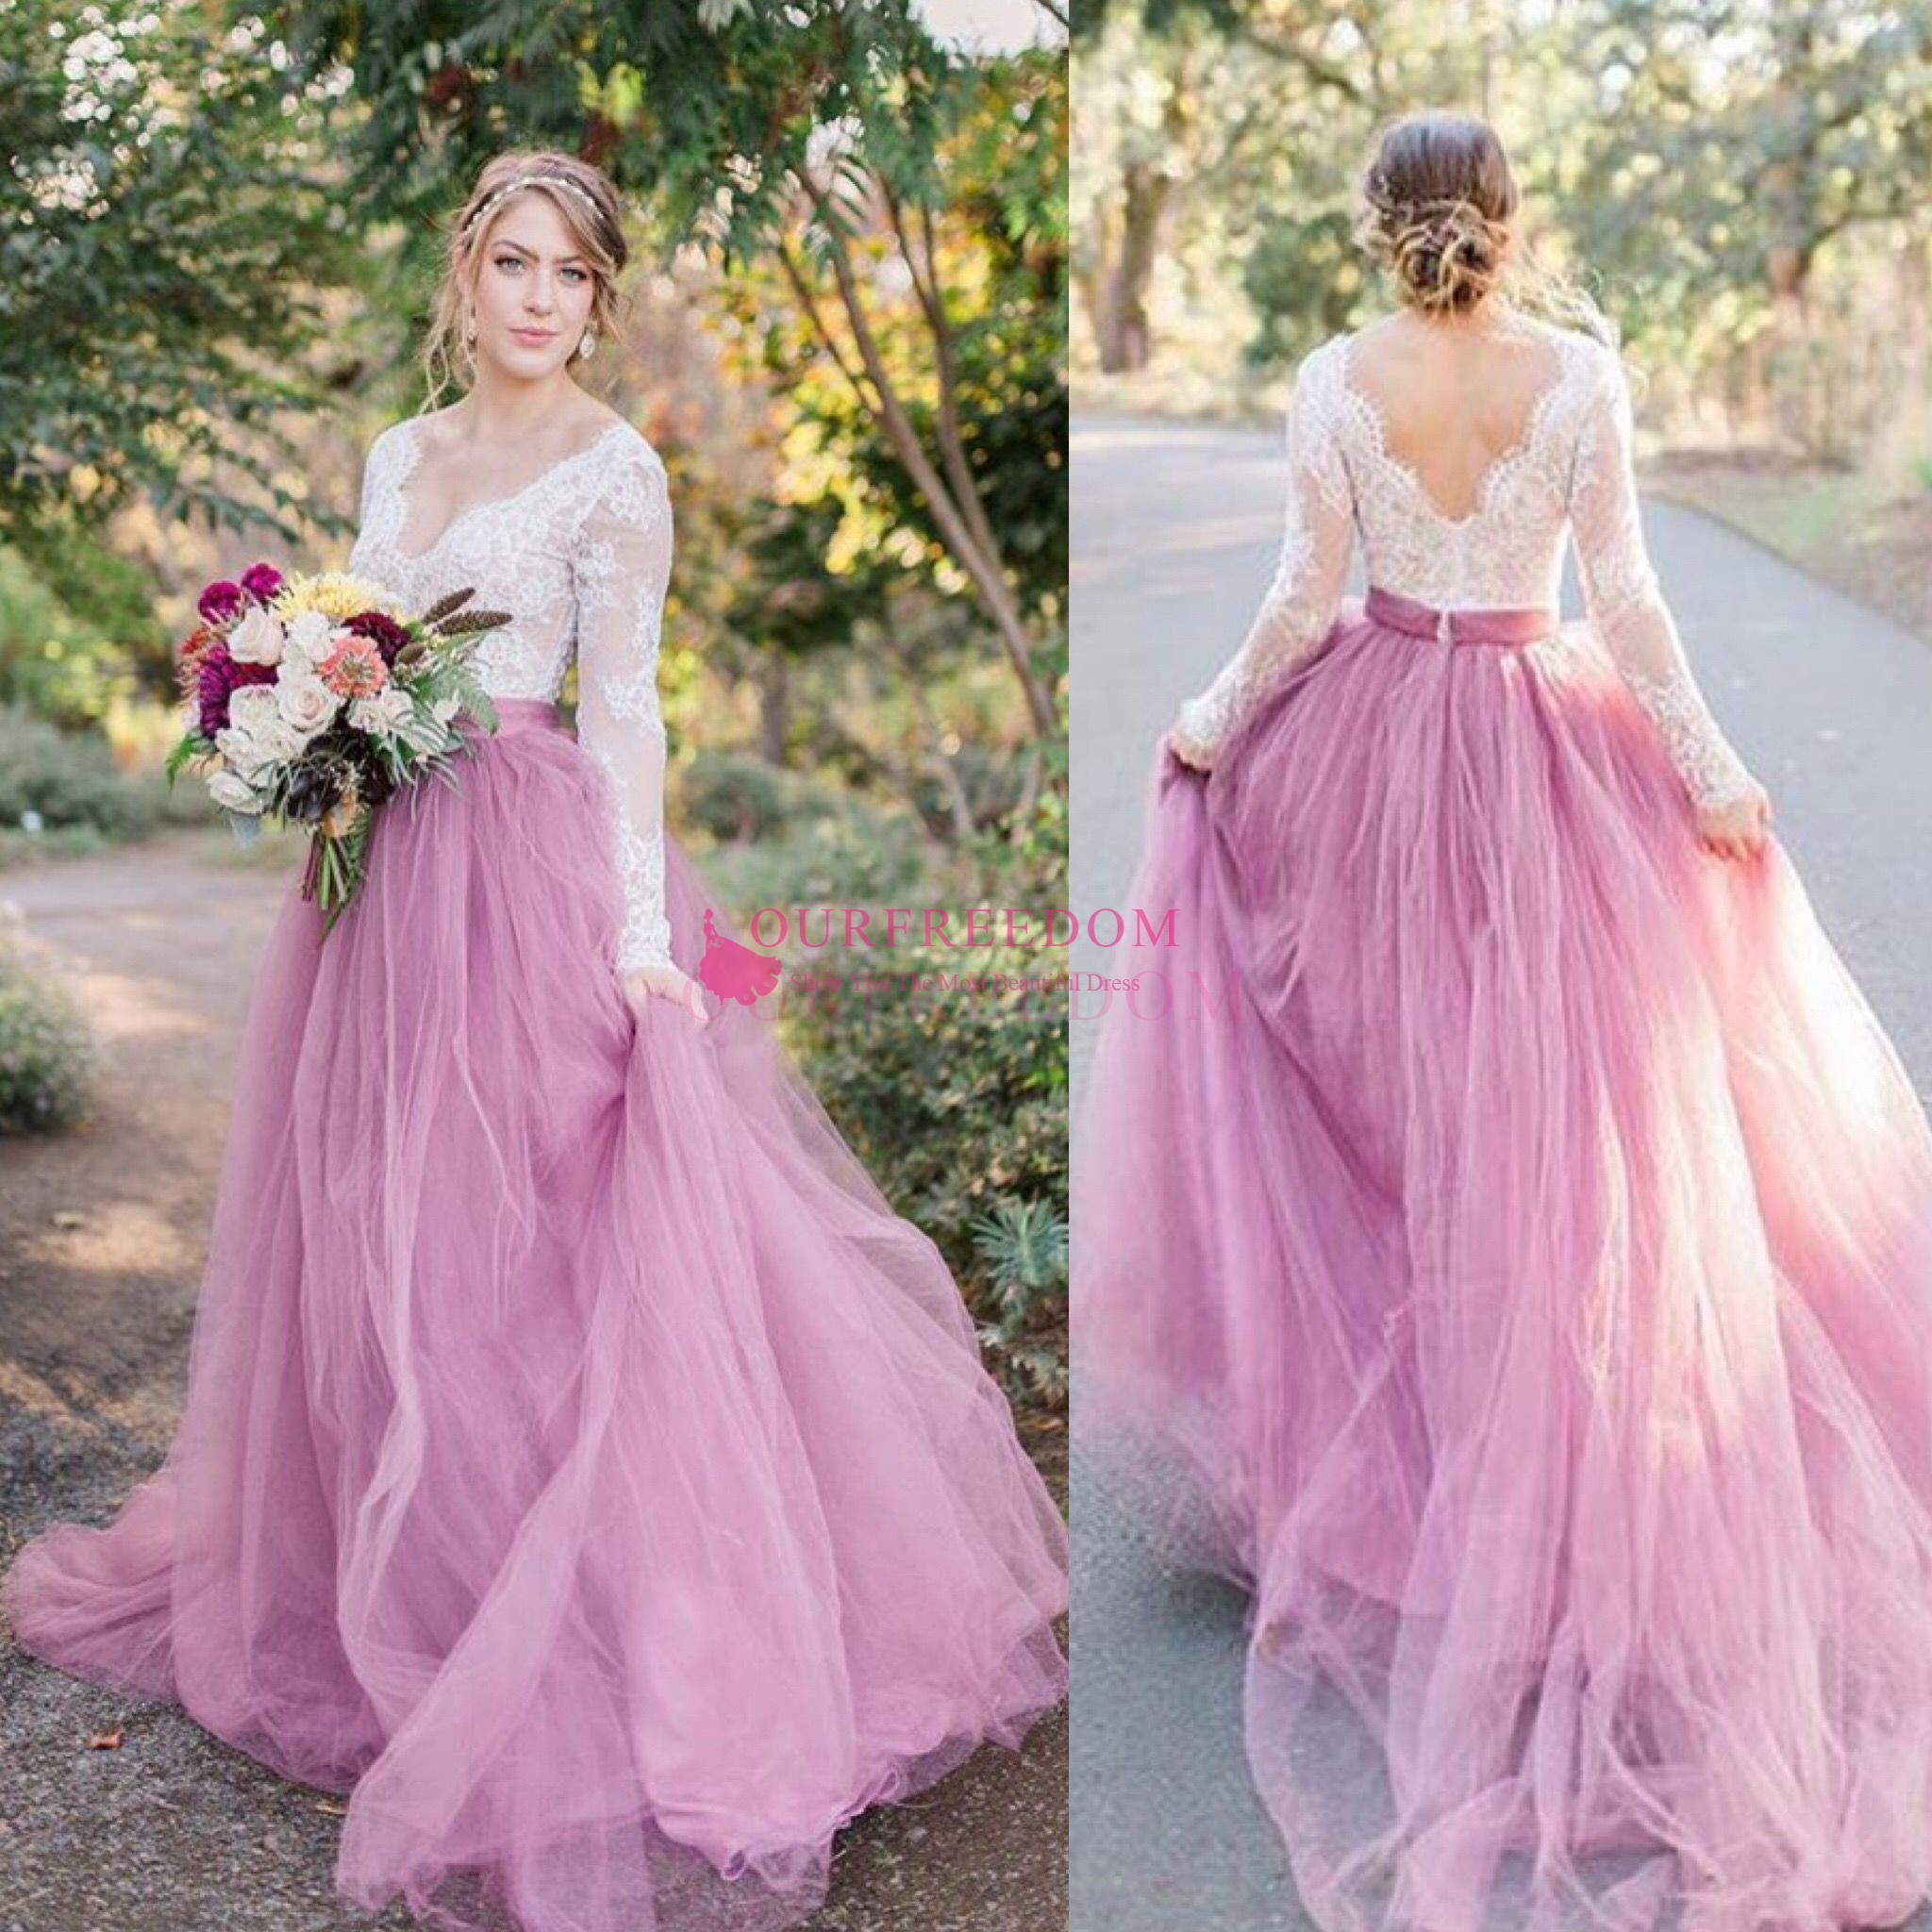 

2020 Bohemian Pink Wedding Dresses V Neck Long Sleeve Lace Sweep Train Beach Boho Garden Country Bridal Gowns Robe De Mariée Plus Size, Same as image